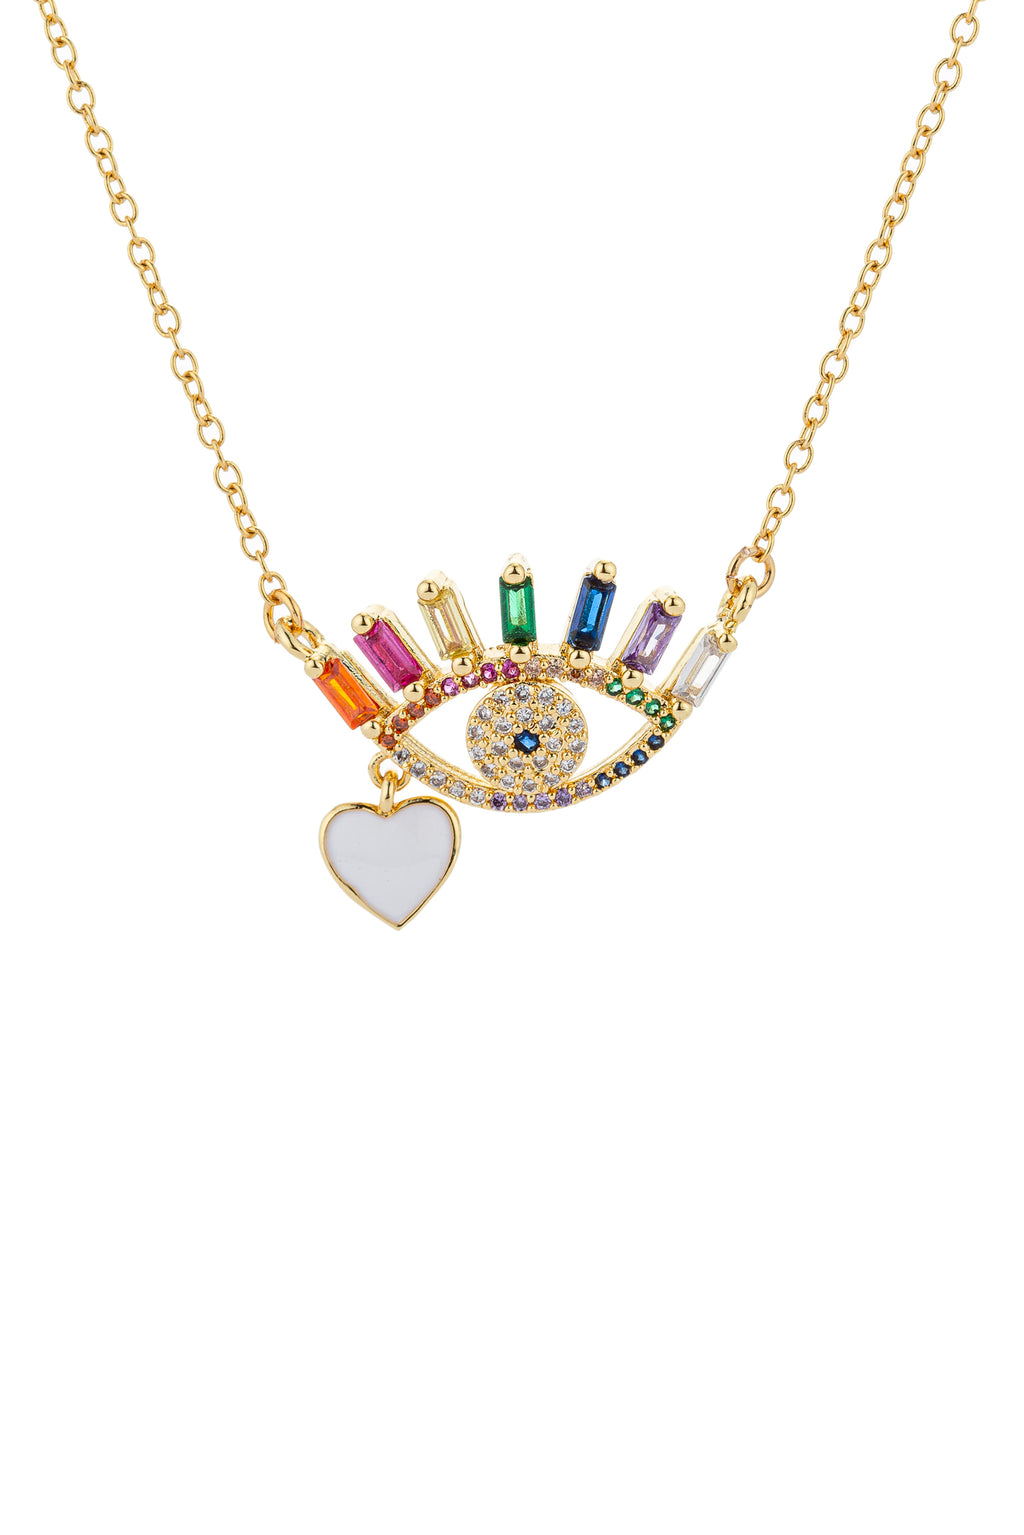 An eye heart pendant necklace studded with rainbow CZ crystals.